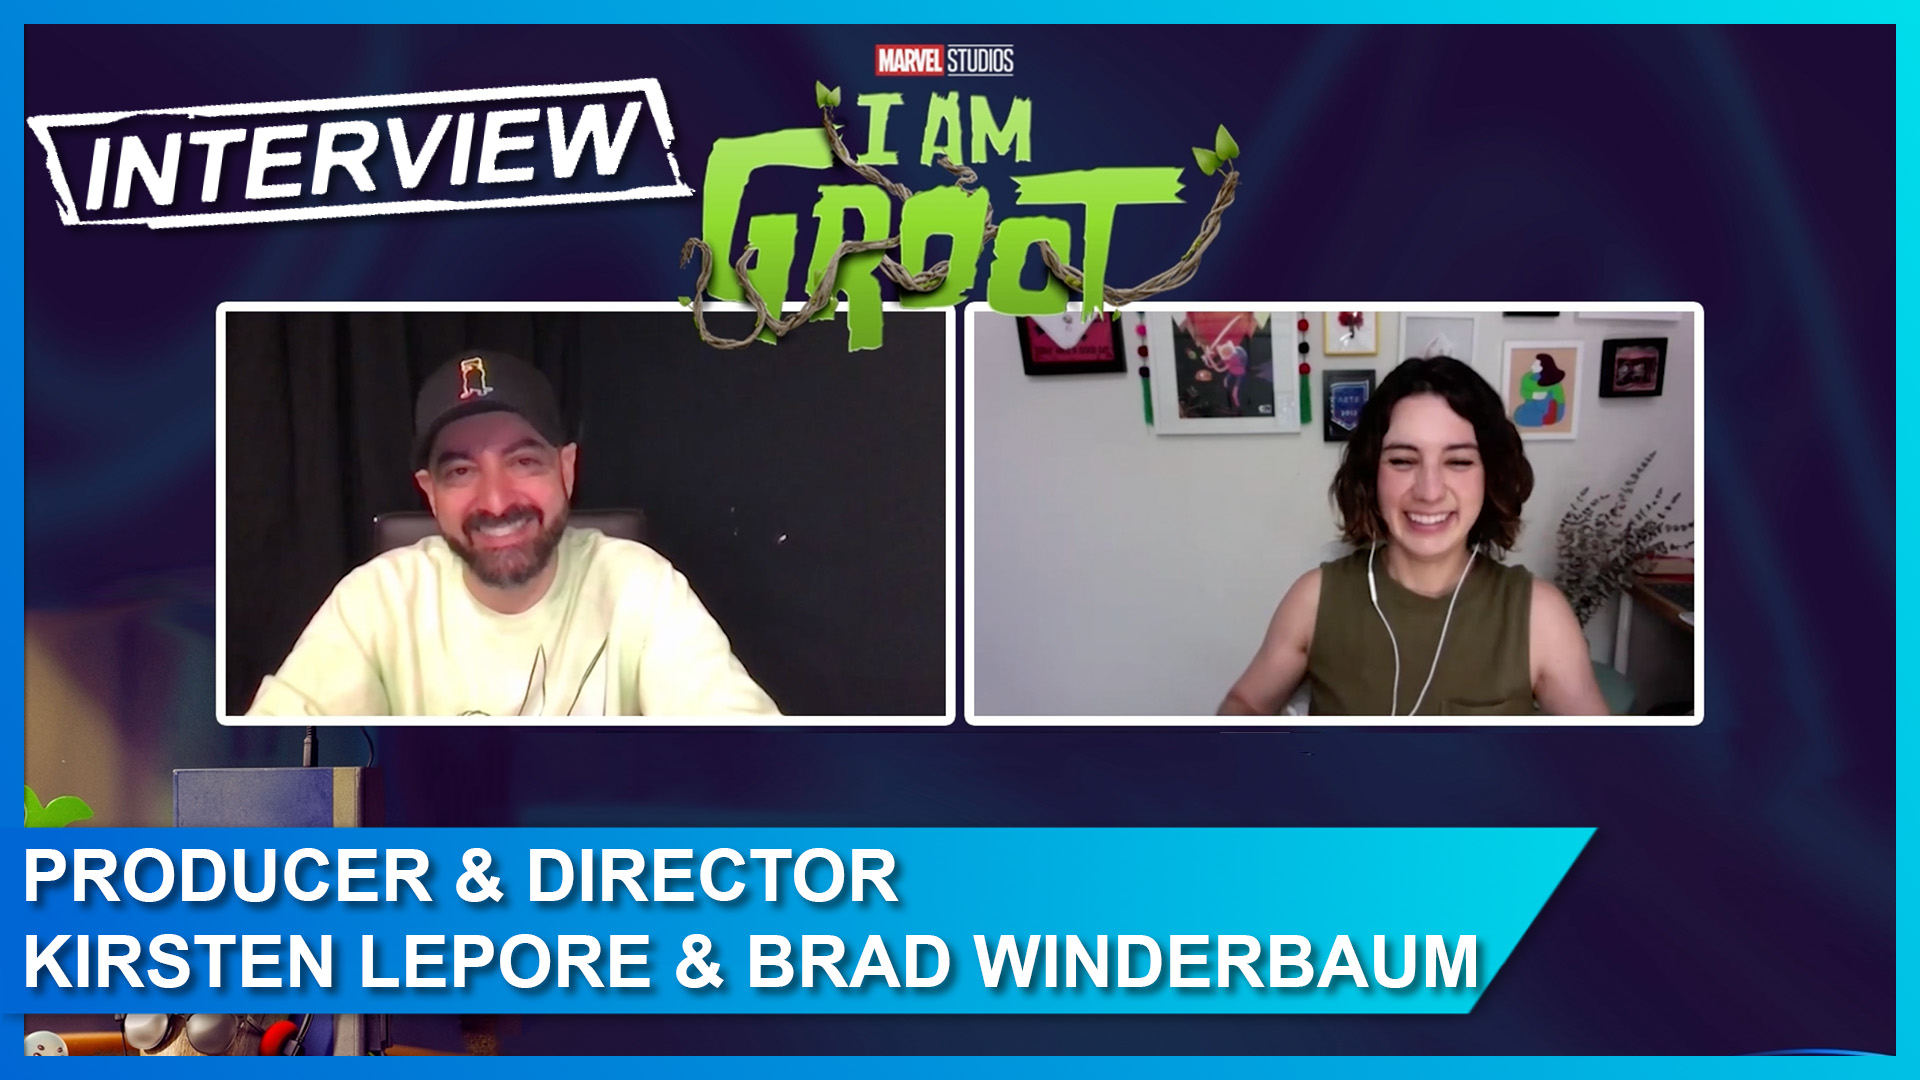 Marvel's I Am Groot Disney+ original show interview with Kirsten Lepore and Brad Winderbaum